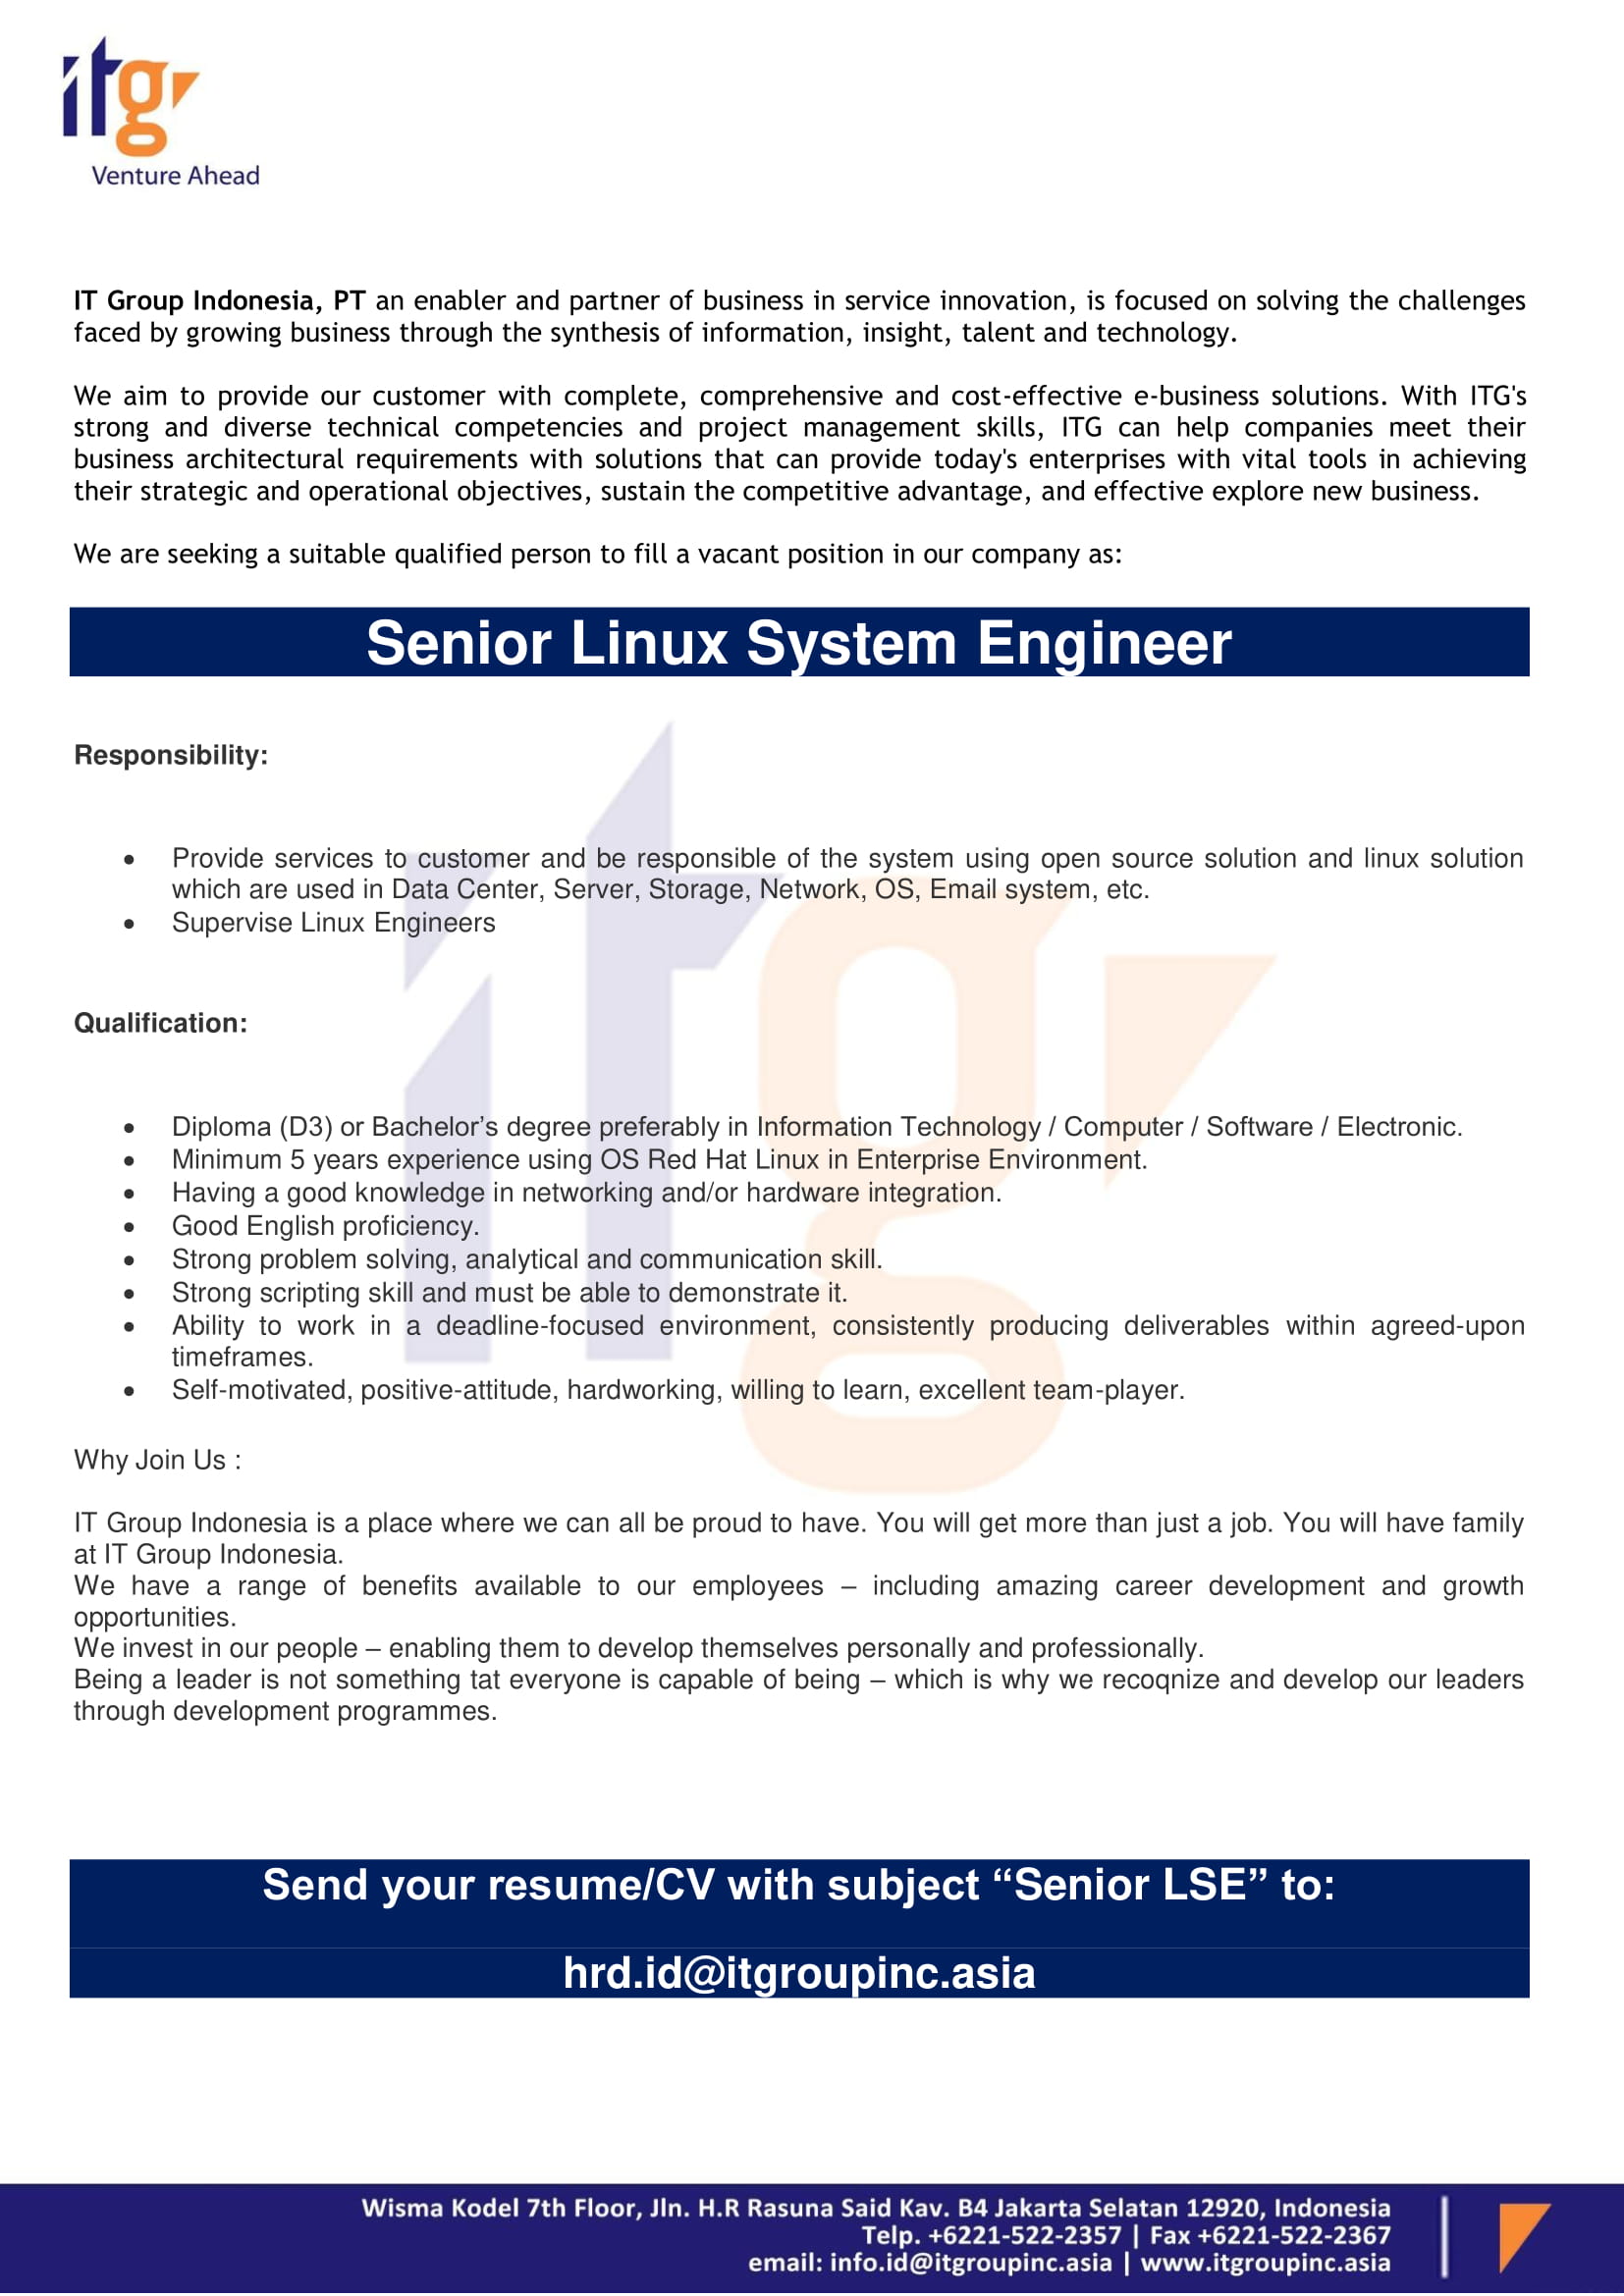 materi-lowongan-senior-linux-system-engineer-1.jpg